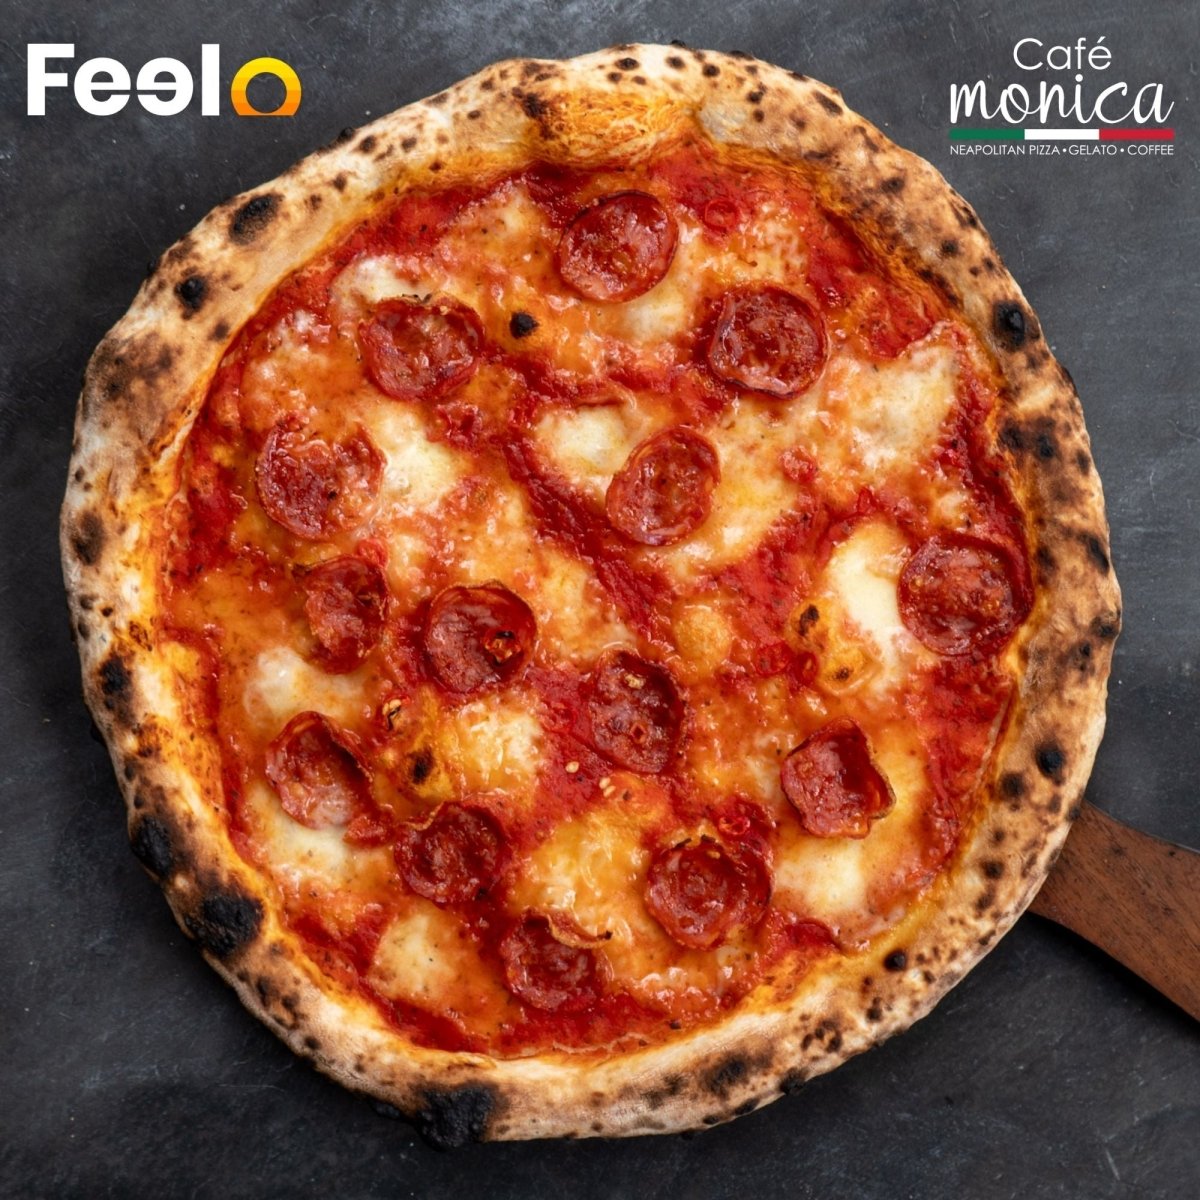 1x Vesuvio Regular 12-inch Pizza in Cafe Monica - Dutch Hospital - Cafe Monica Sri Lanka, Colombo 01 | Feelo